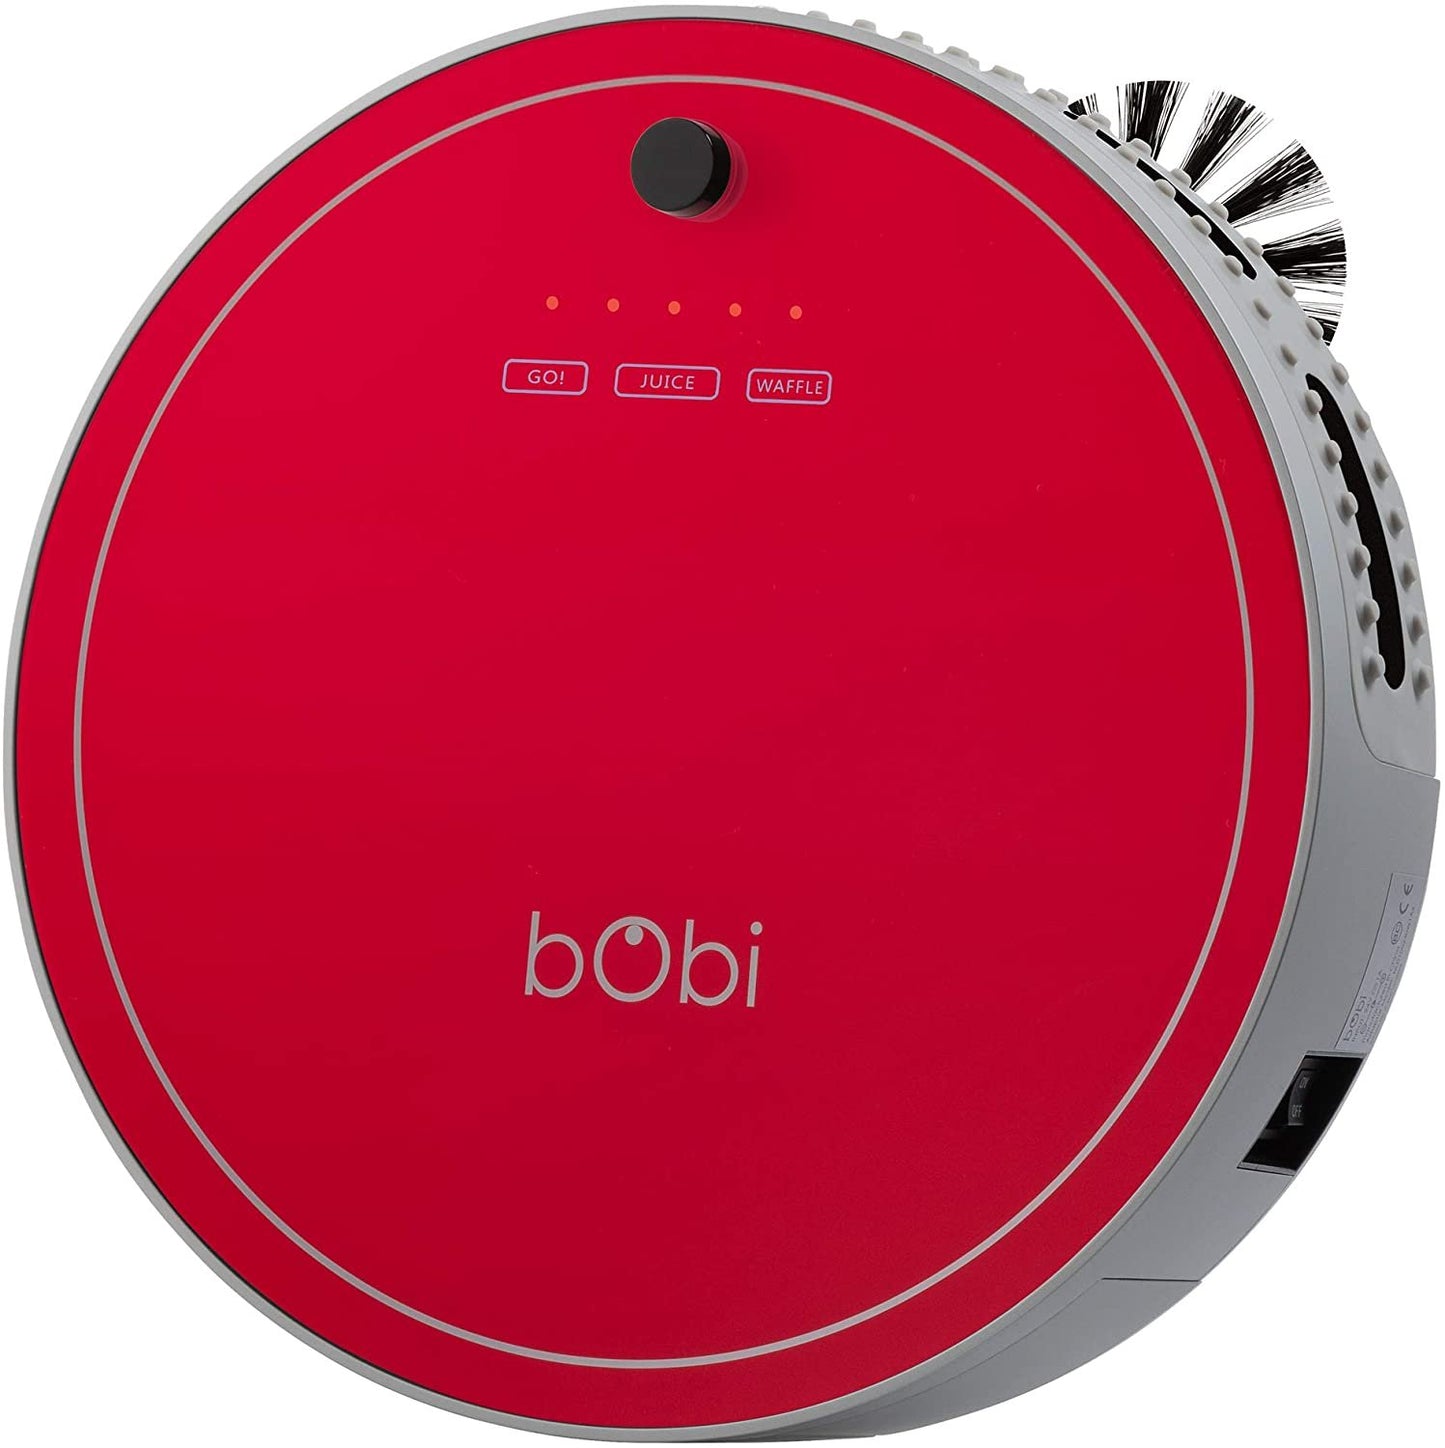 bObi Pet Robotic Vacuum Cleaner and Mop